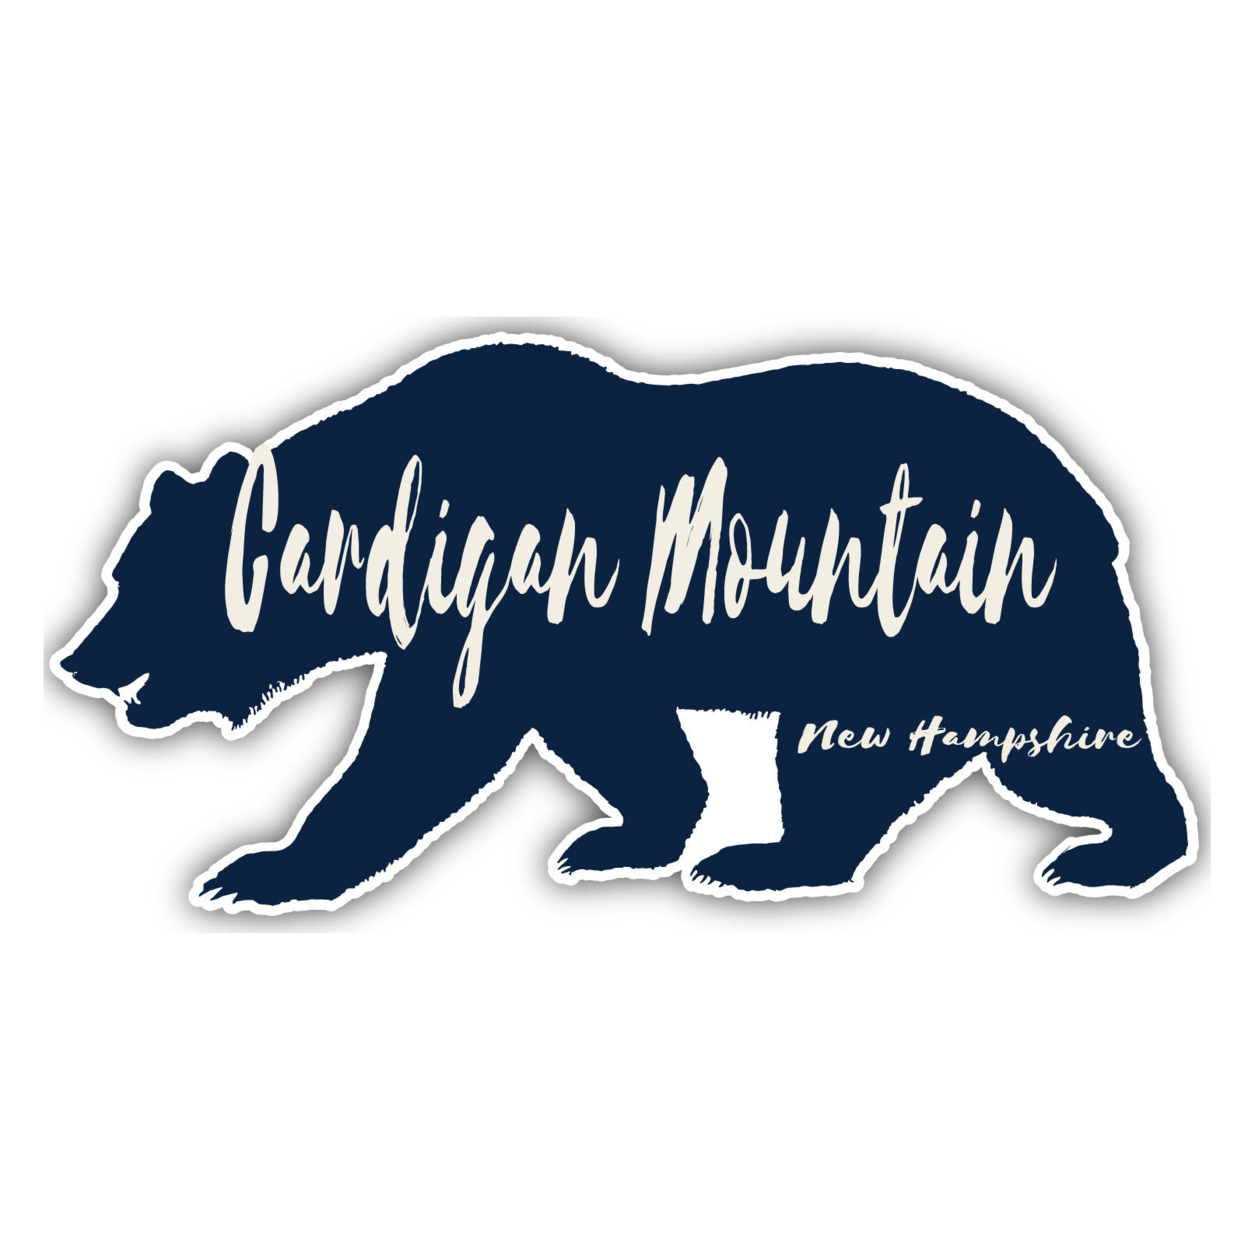 Cardigan Mountain New Hampshire Souvenir Decorative Stickers (Choose Theme And Size) - Single Unit, 4-Inch, Bear